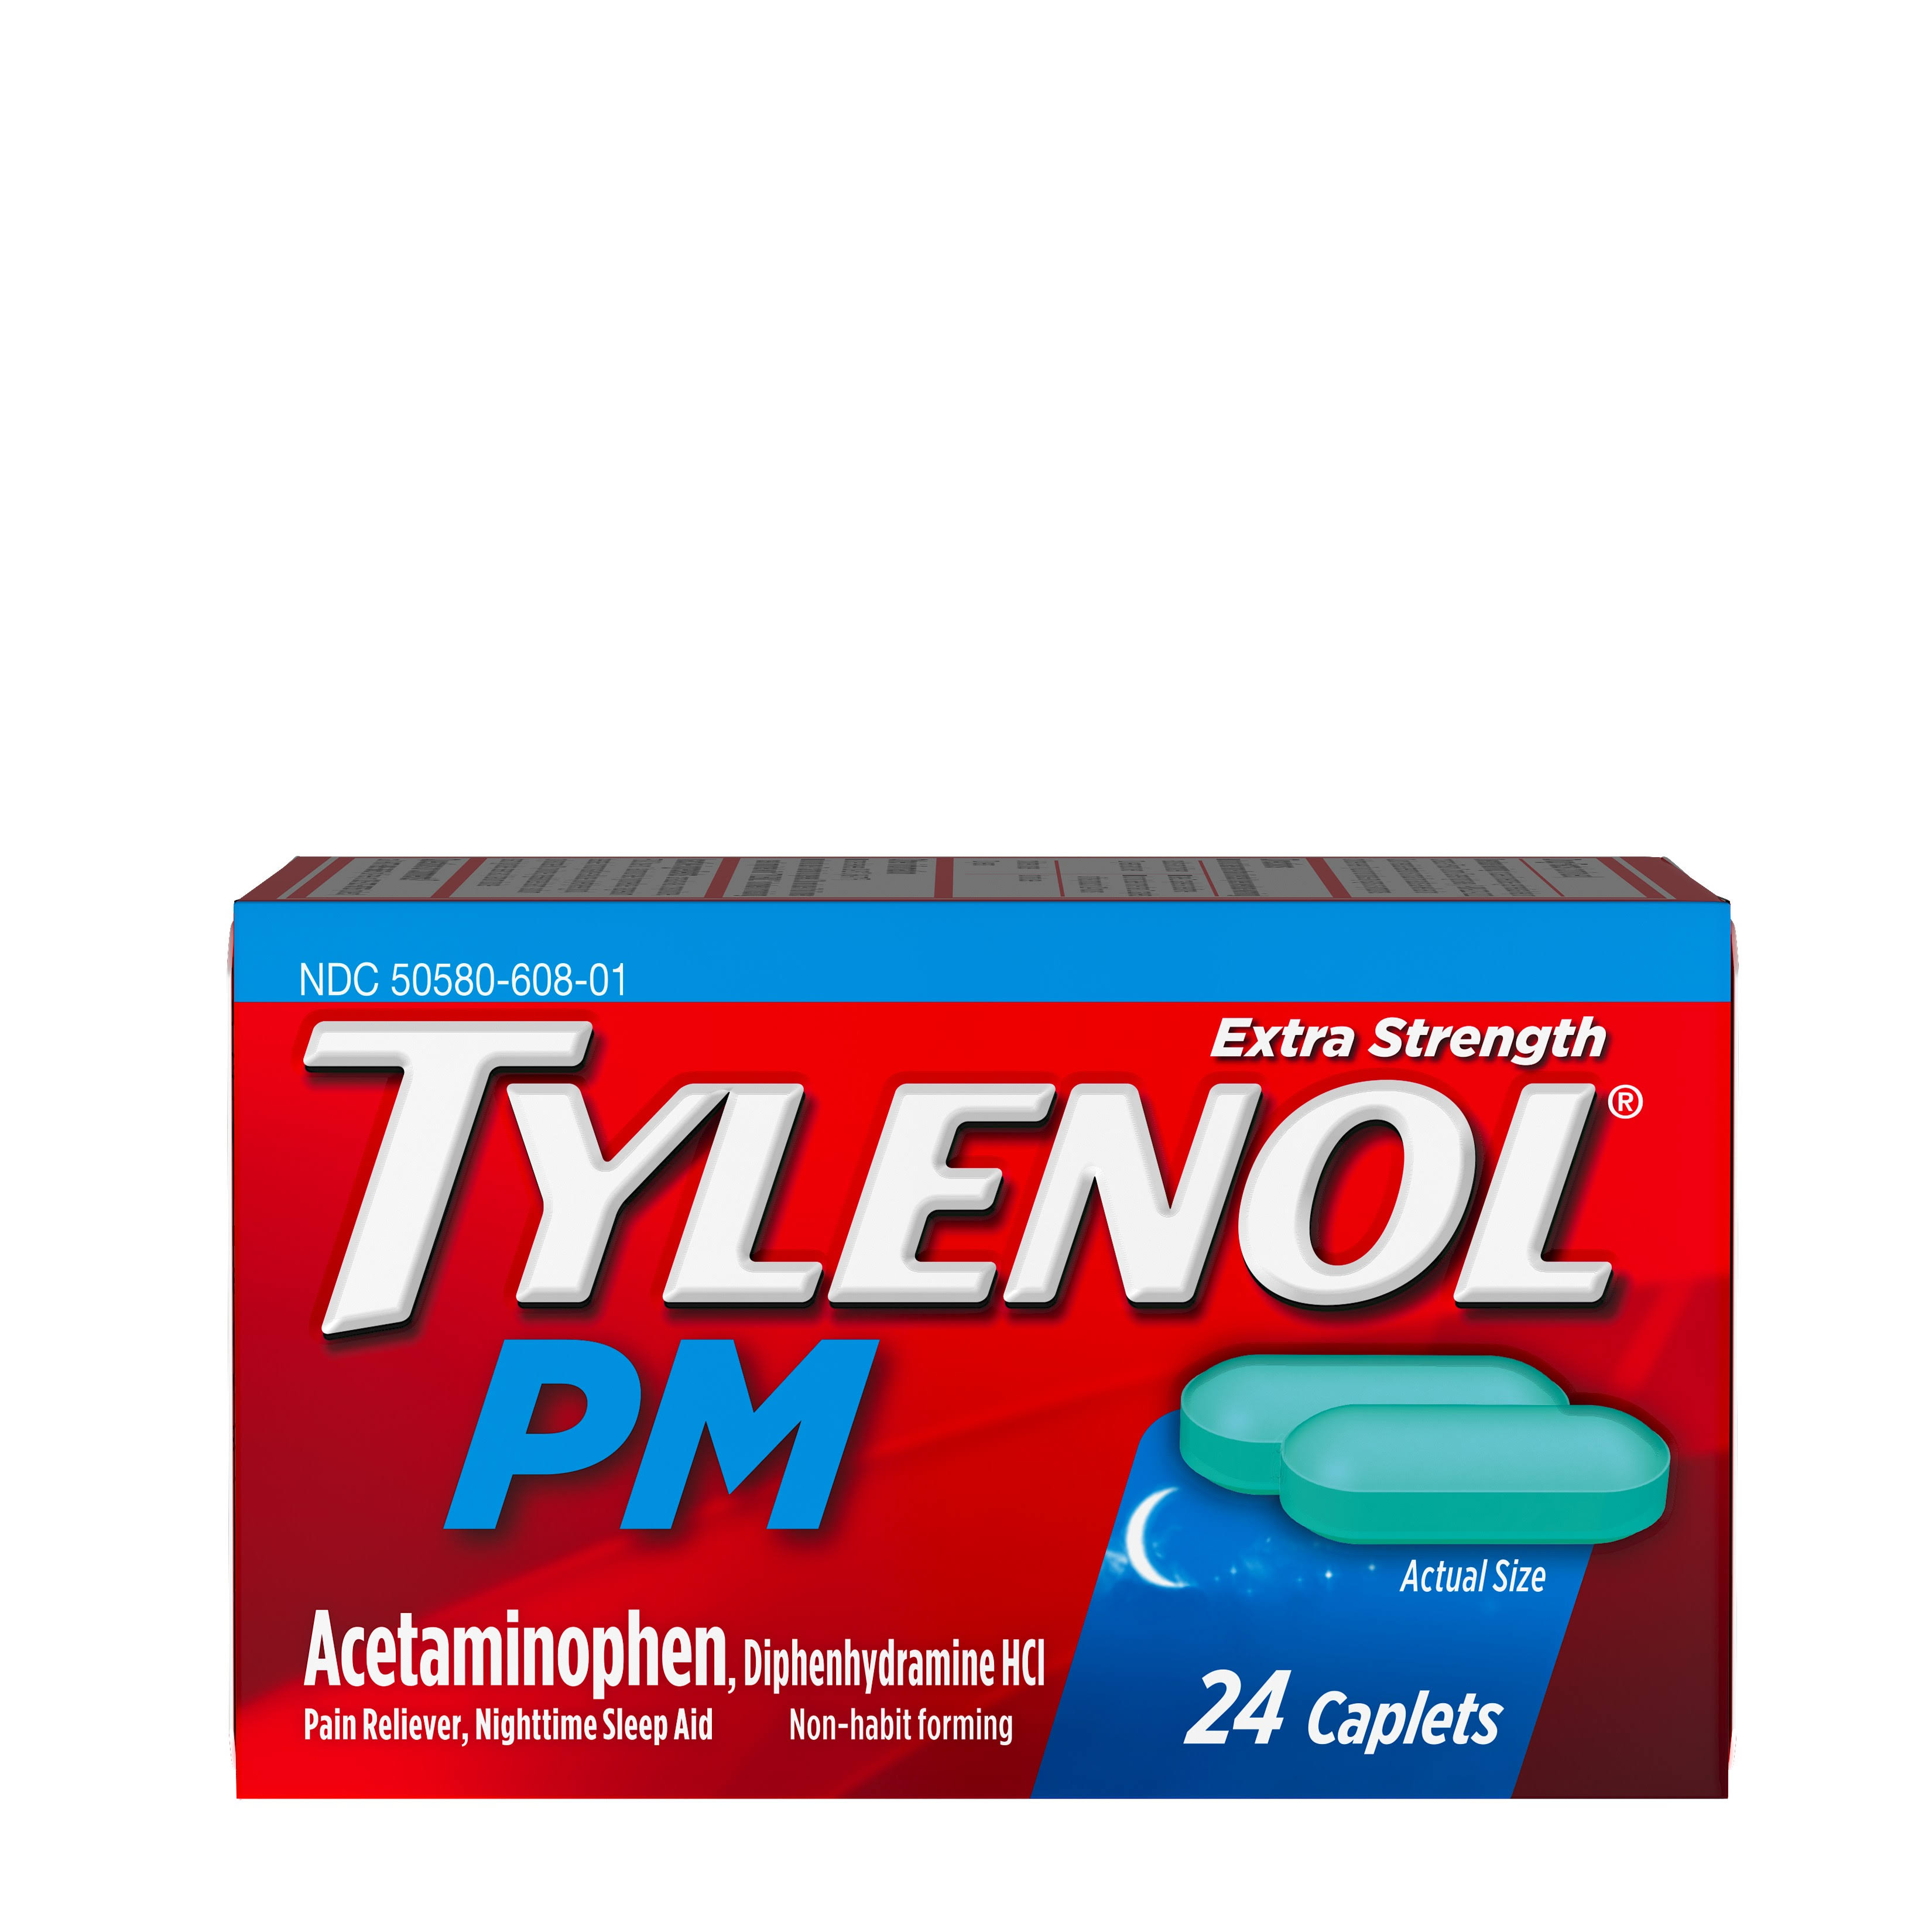 Tylenol PM Extra Strength Pain Reliever/Nighttime Sleep Aid - 24 Caplets